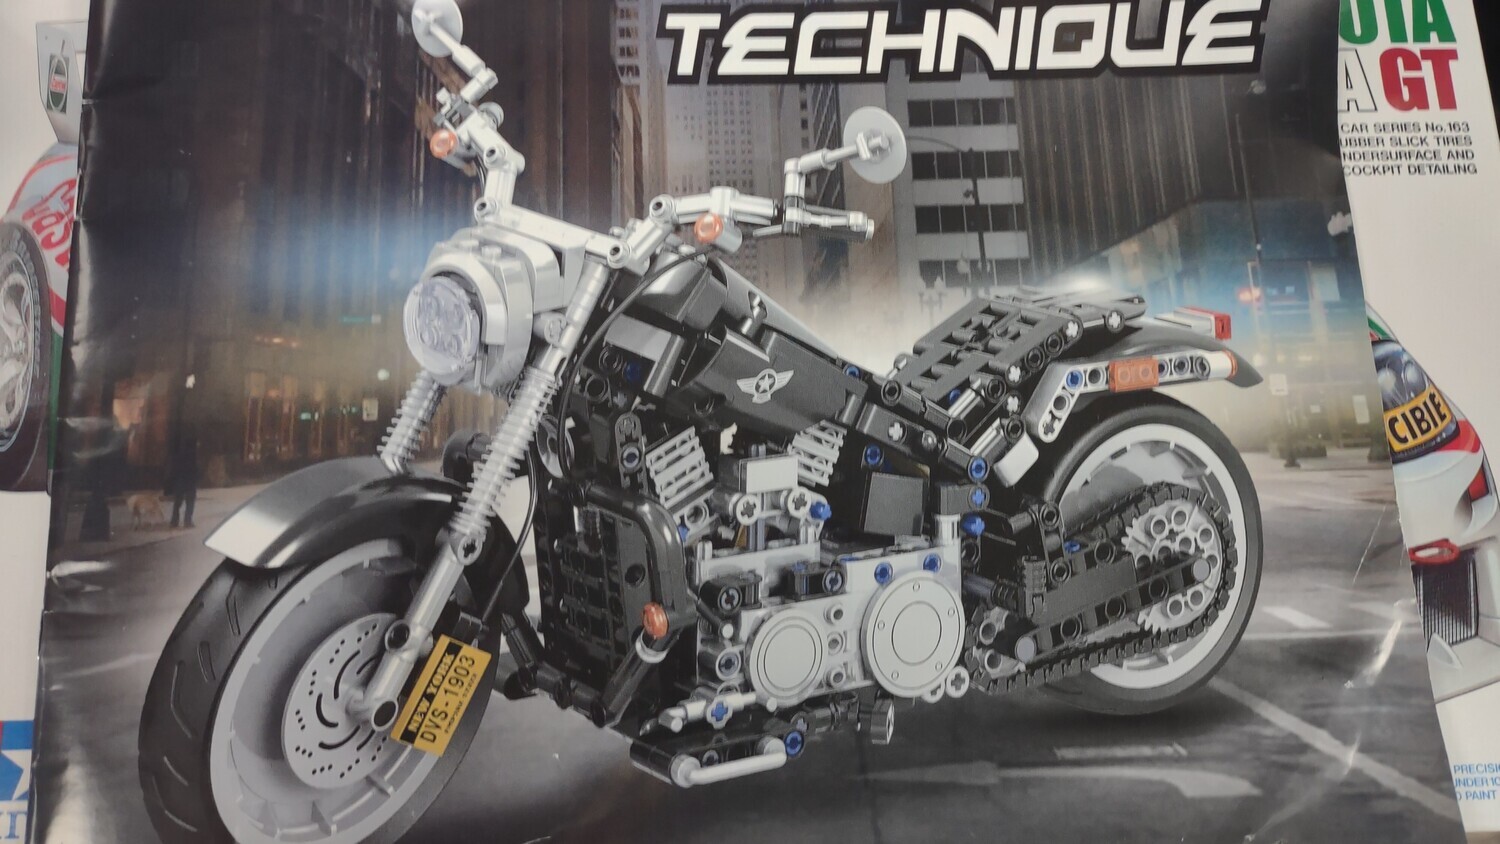 Motorcycle building block kit